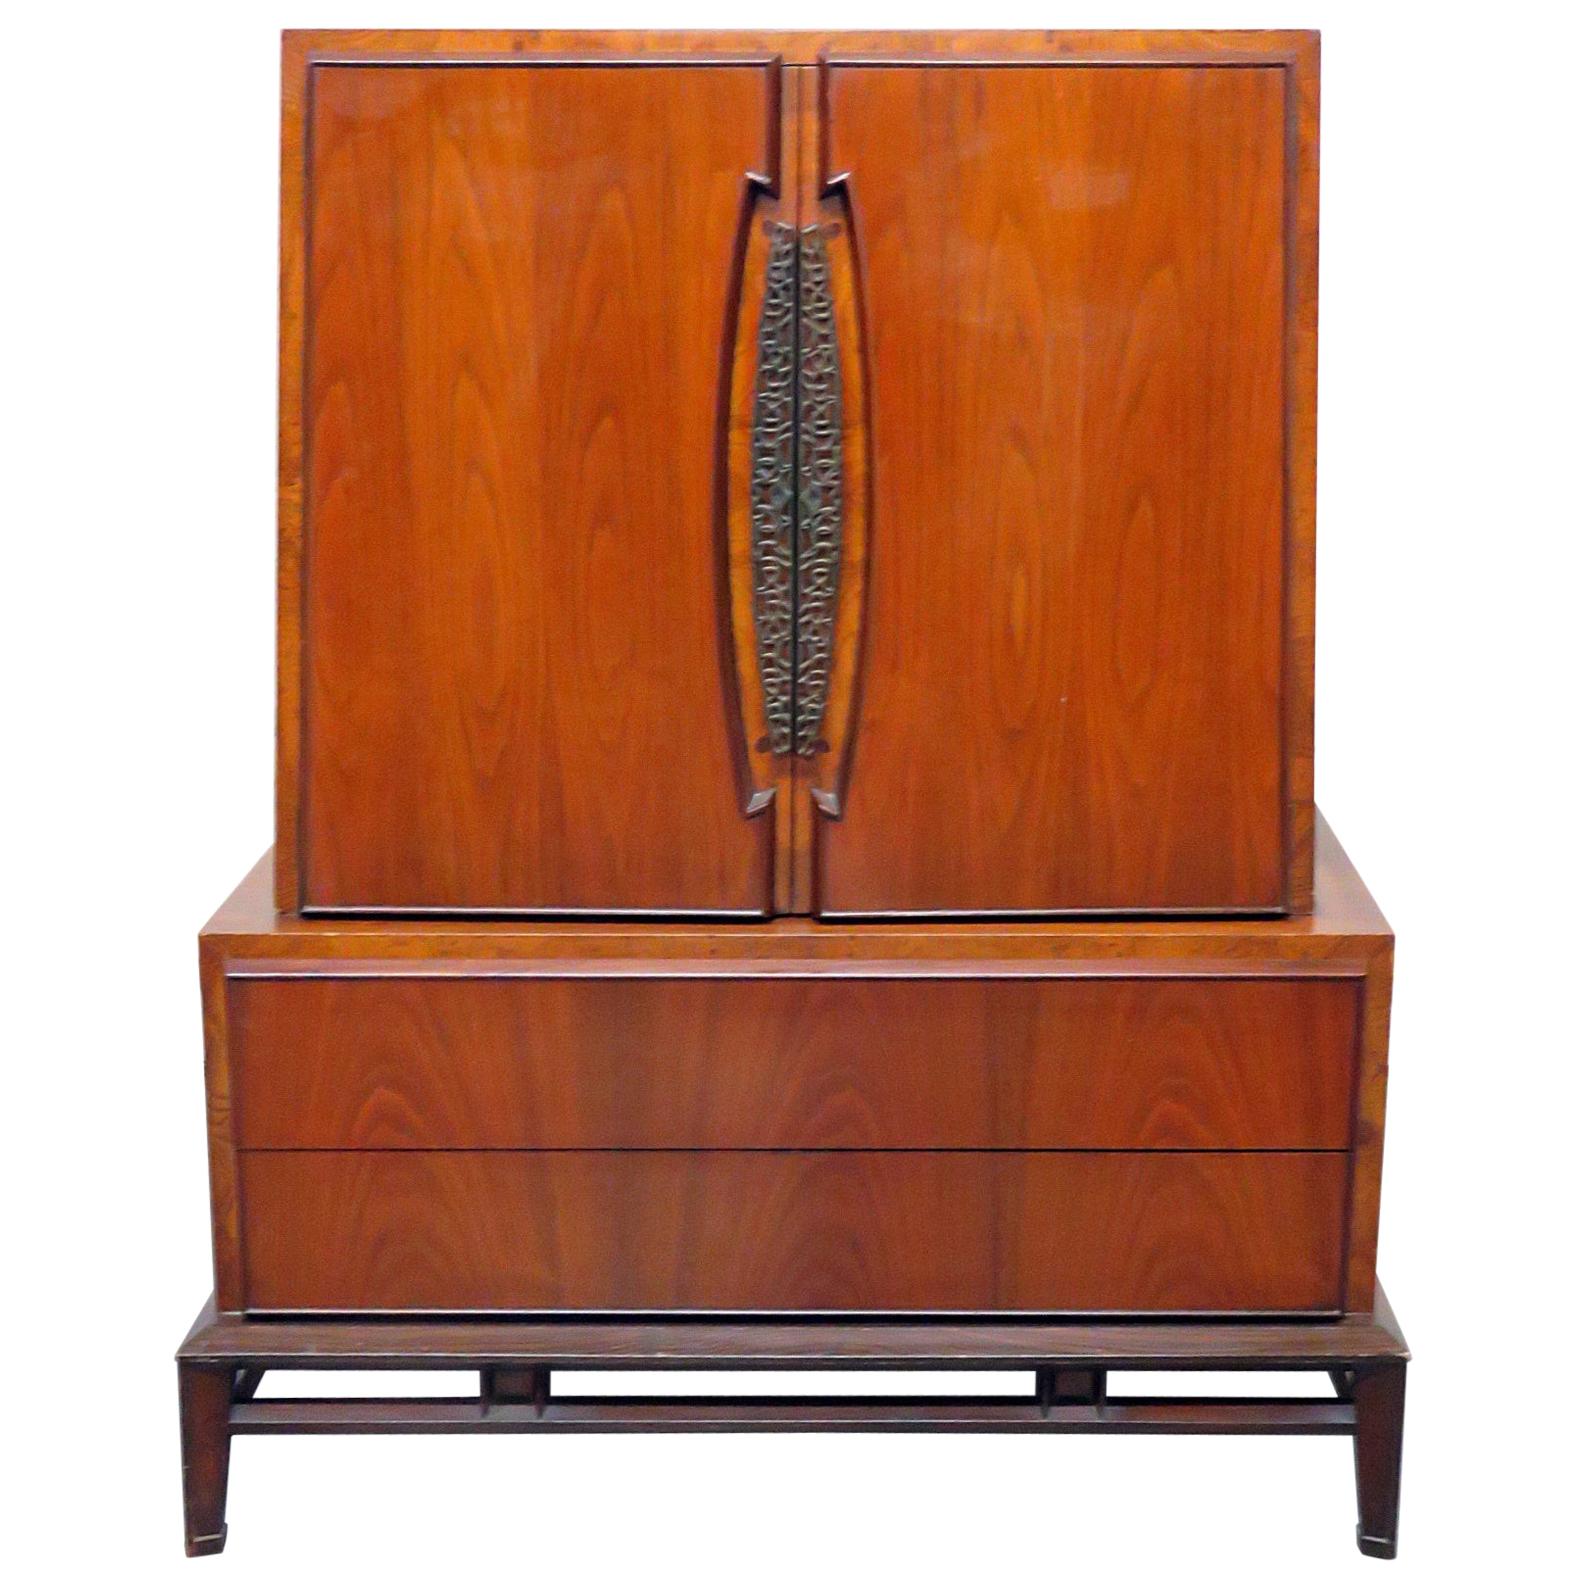 Detroit Furniture Company Mid-Century Modern Gentleman's Chest